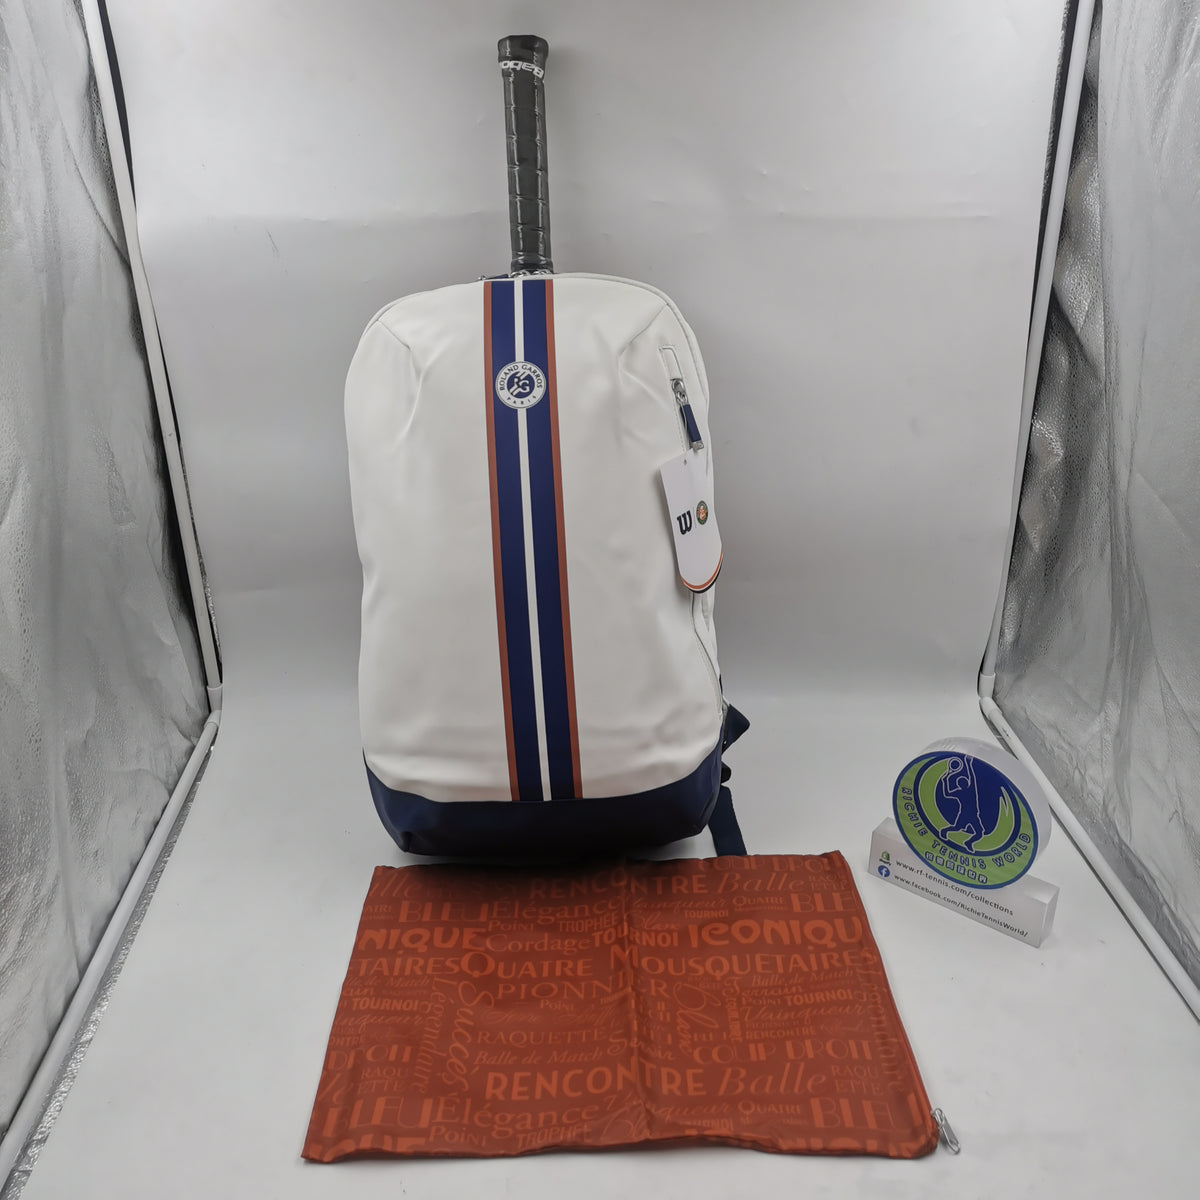 Wilson Premium Roland Garros Backpack Racquet Bag (Oyster Grey/Blue)